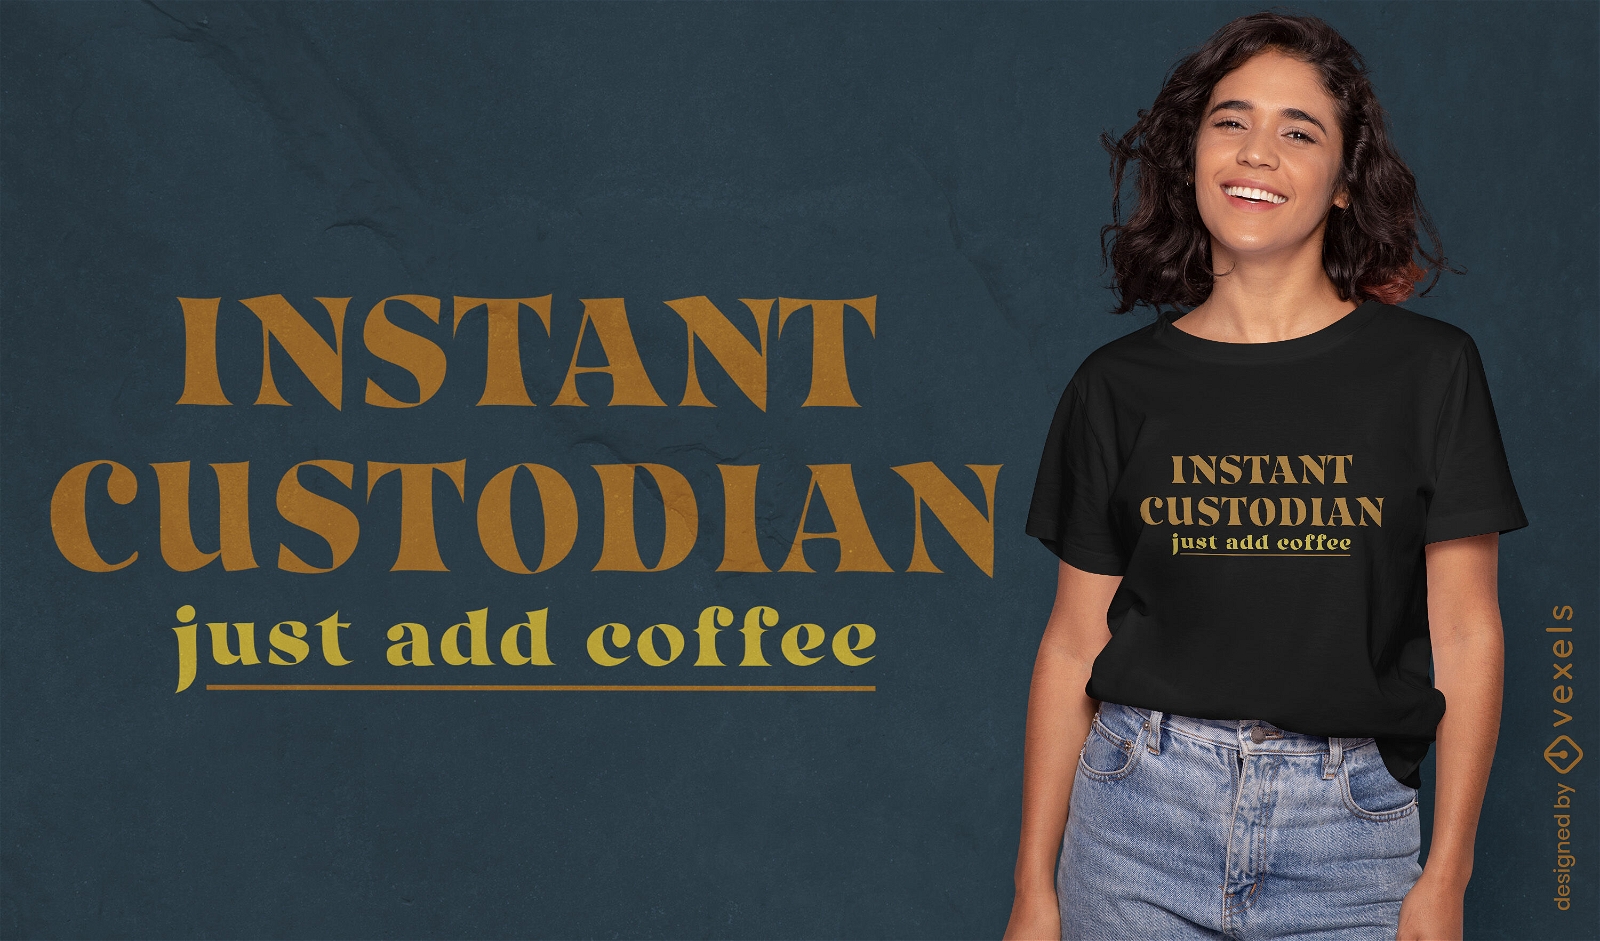 Instant custodian humor t-shirt design